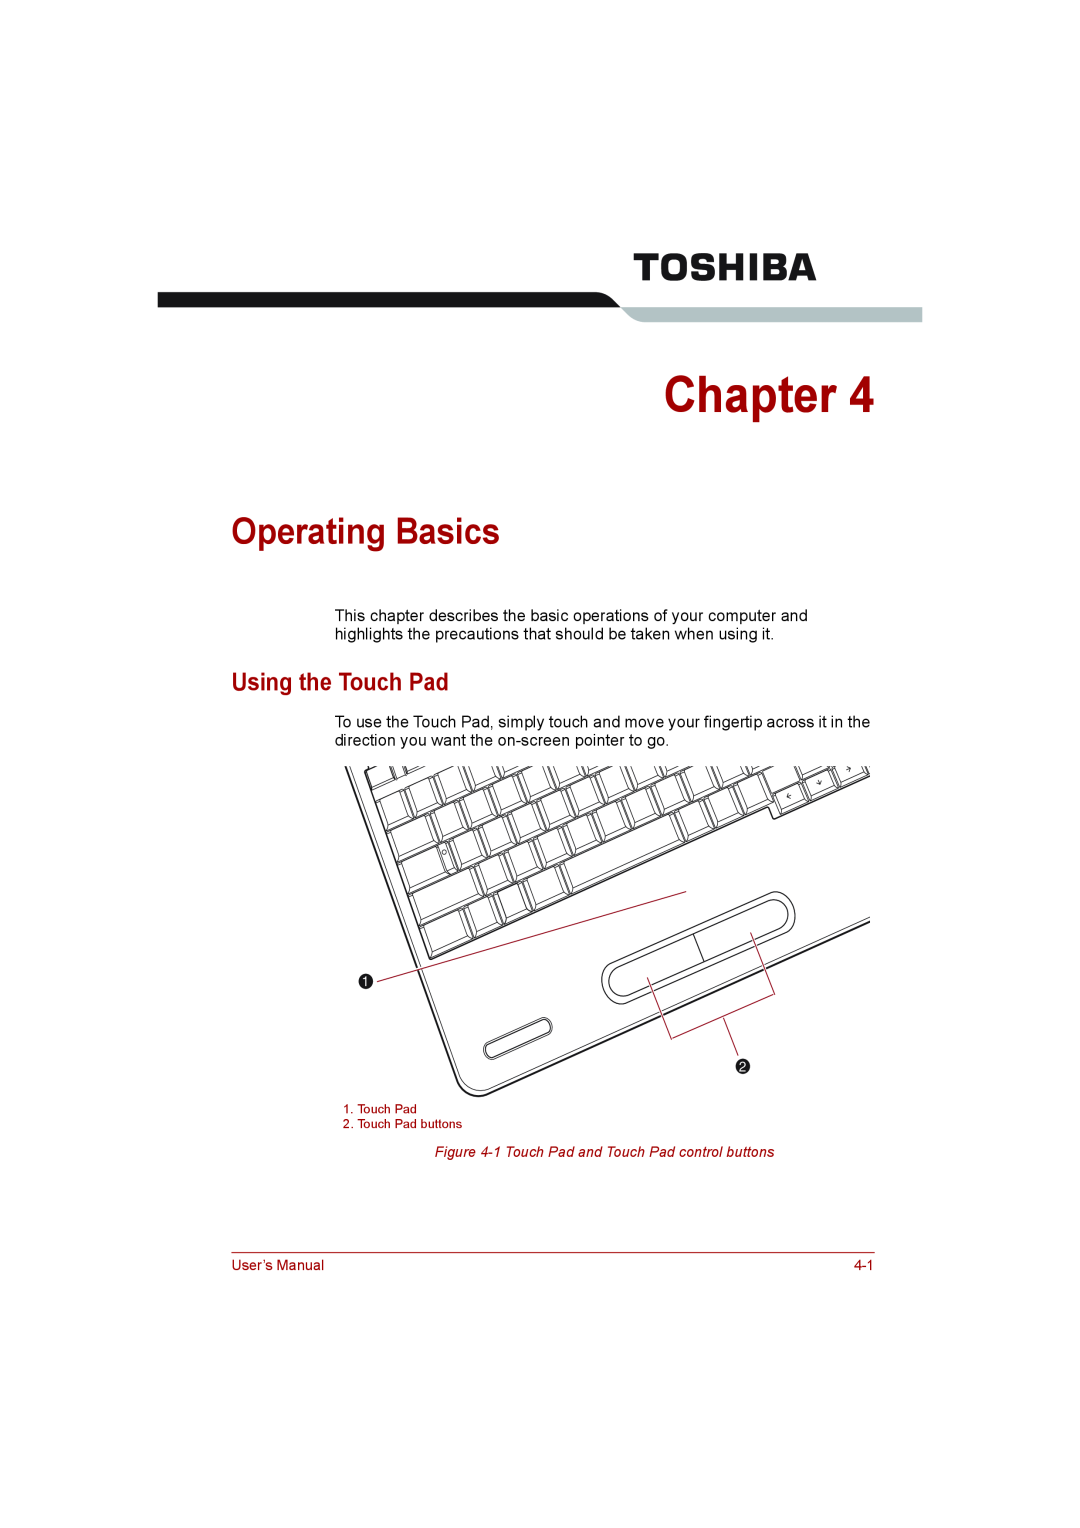 Toshiba toshiba satellite l550/ satellite pro l550/ satellite l550d/ satellite pro l550d series Operating Basics, Chapter 